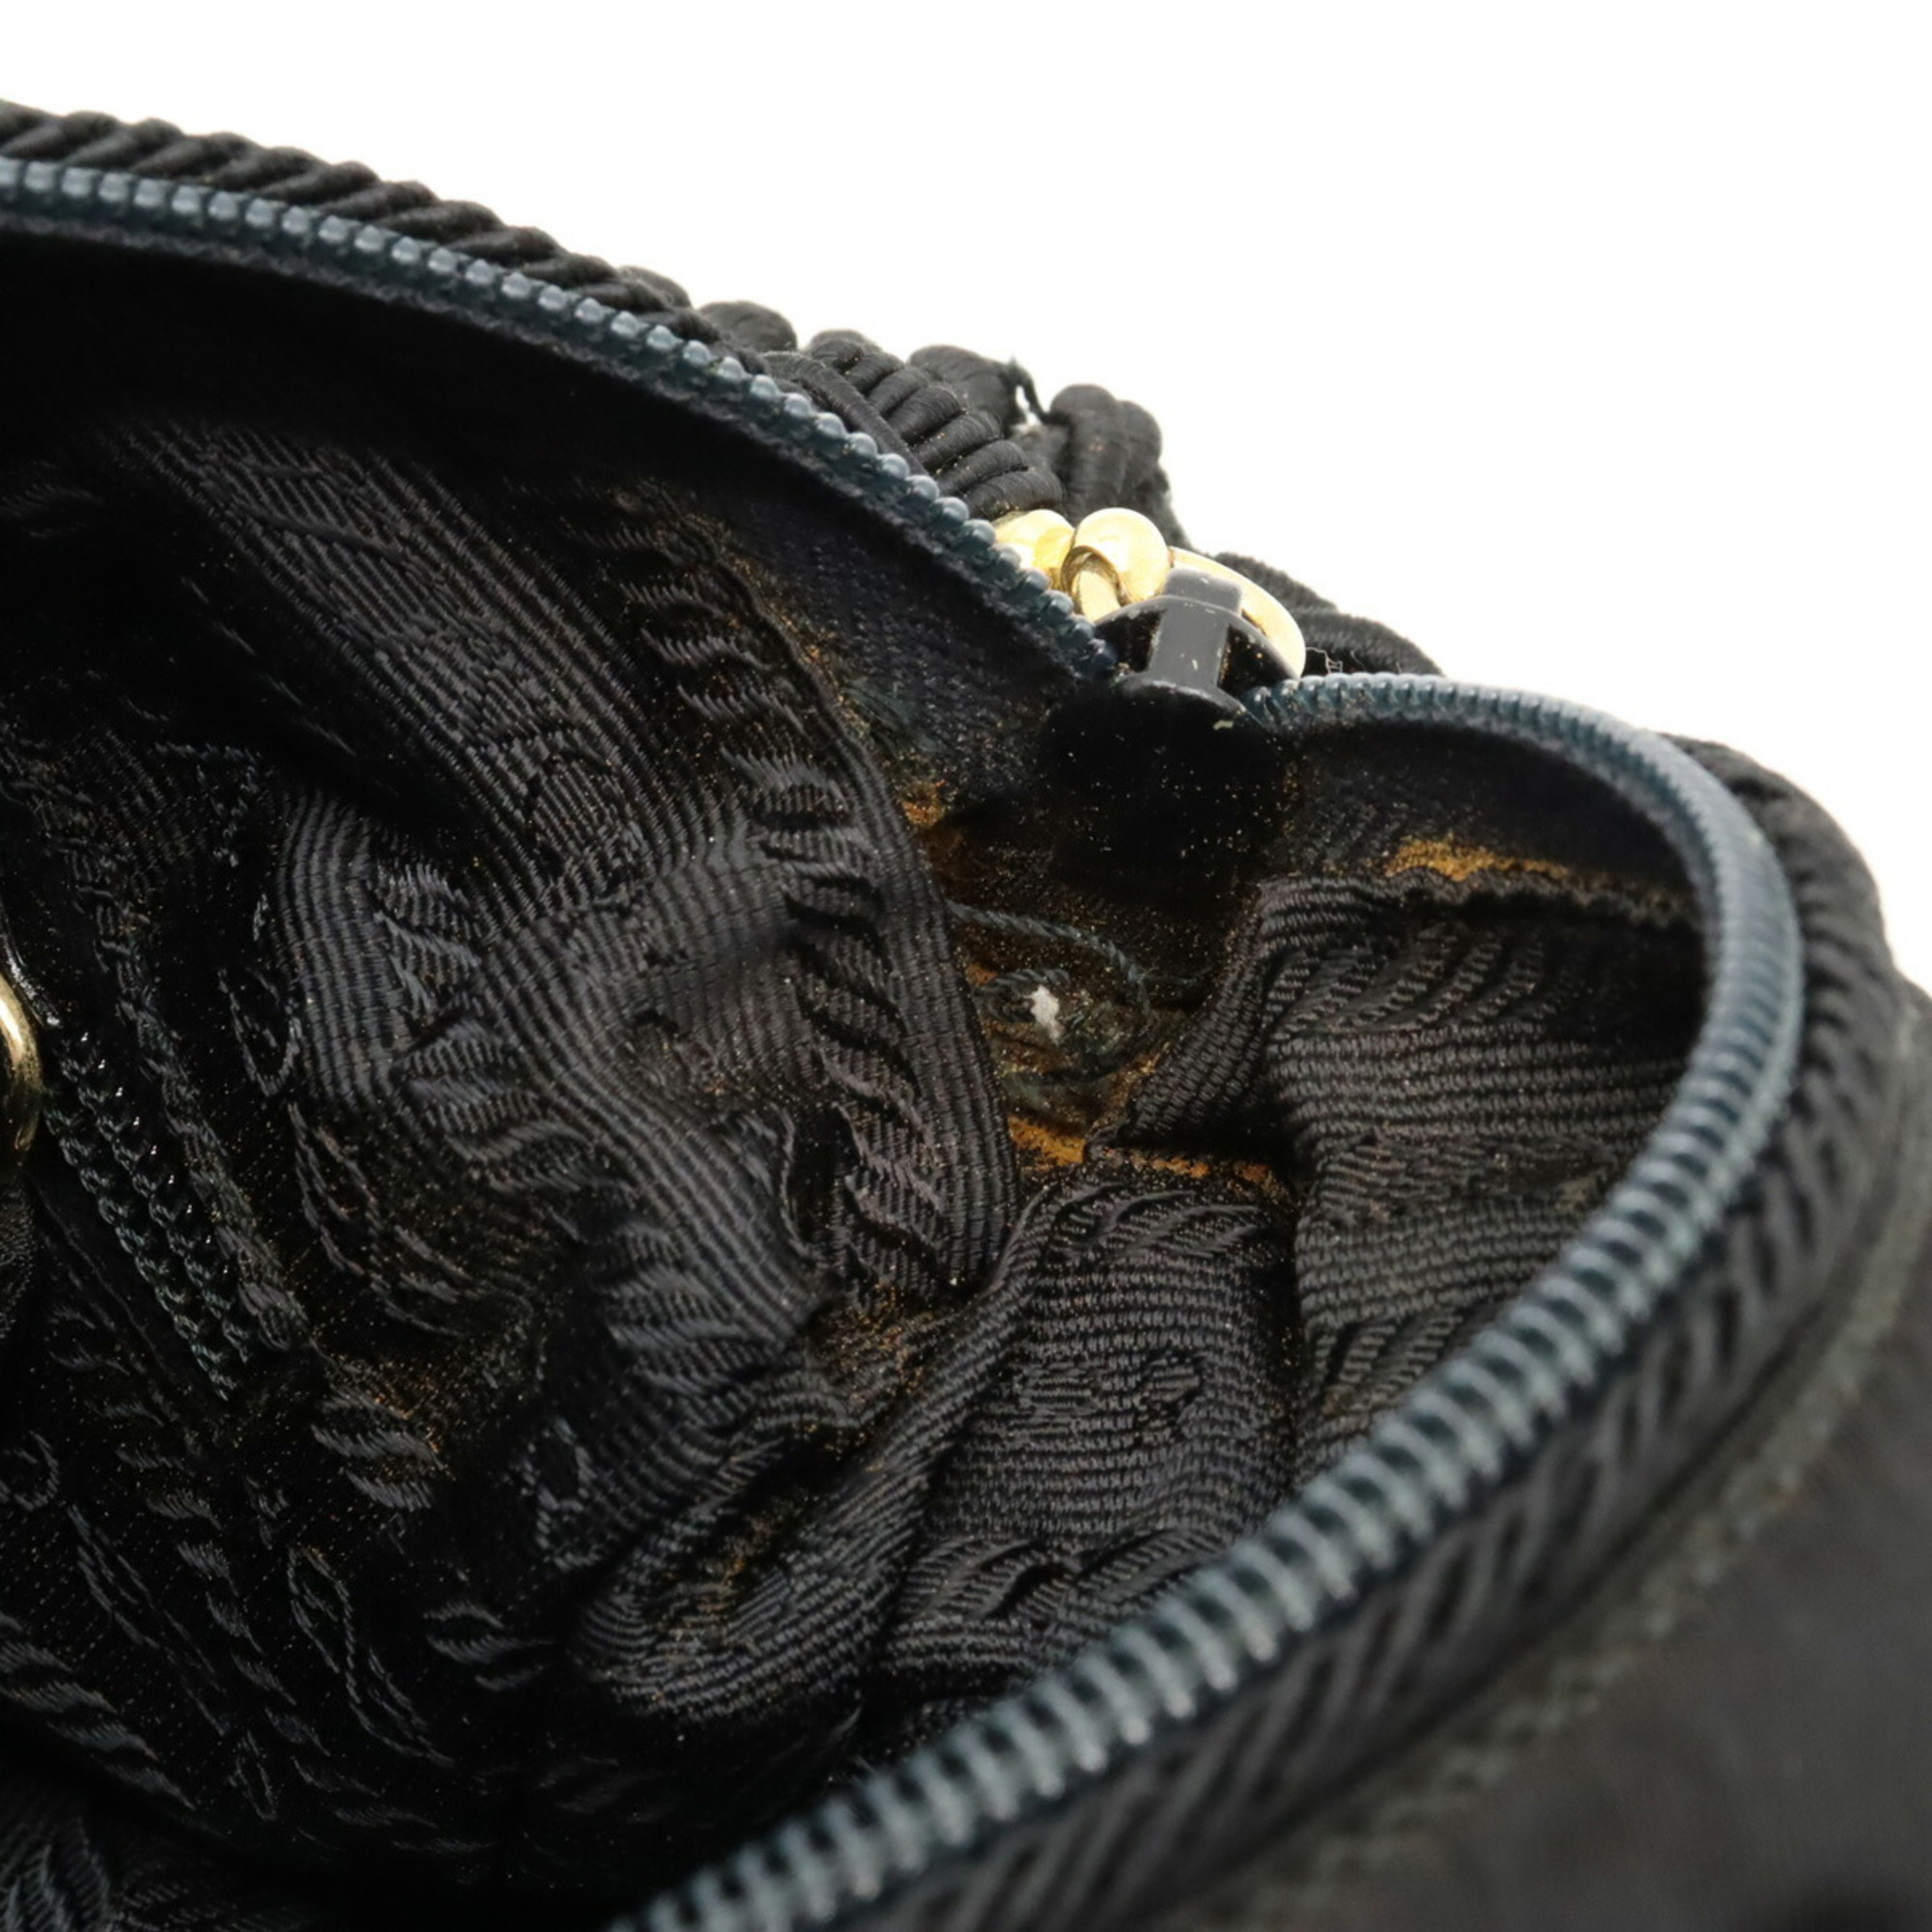 PRADA Prada handbag rope handle tassel beads nylon NERO black